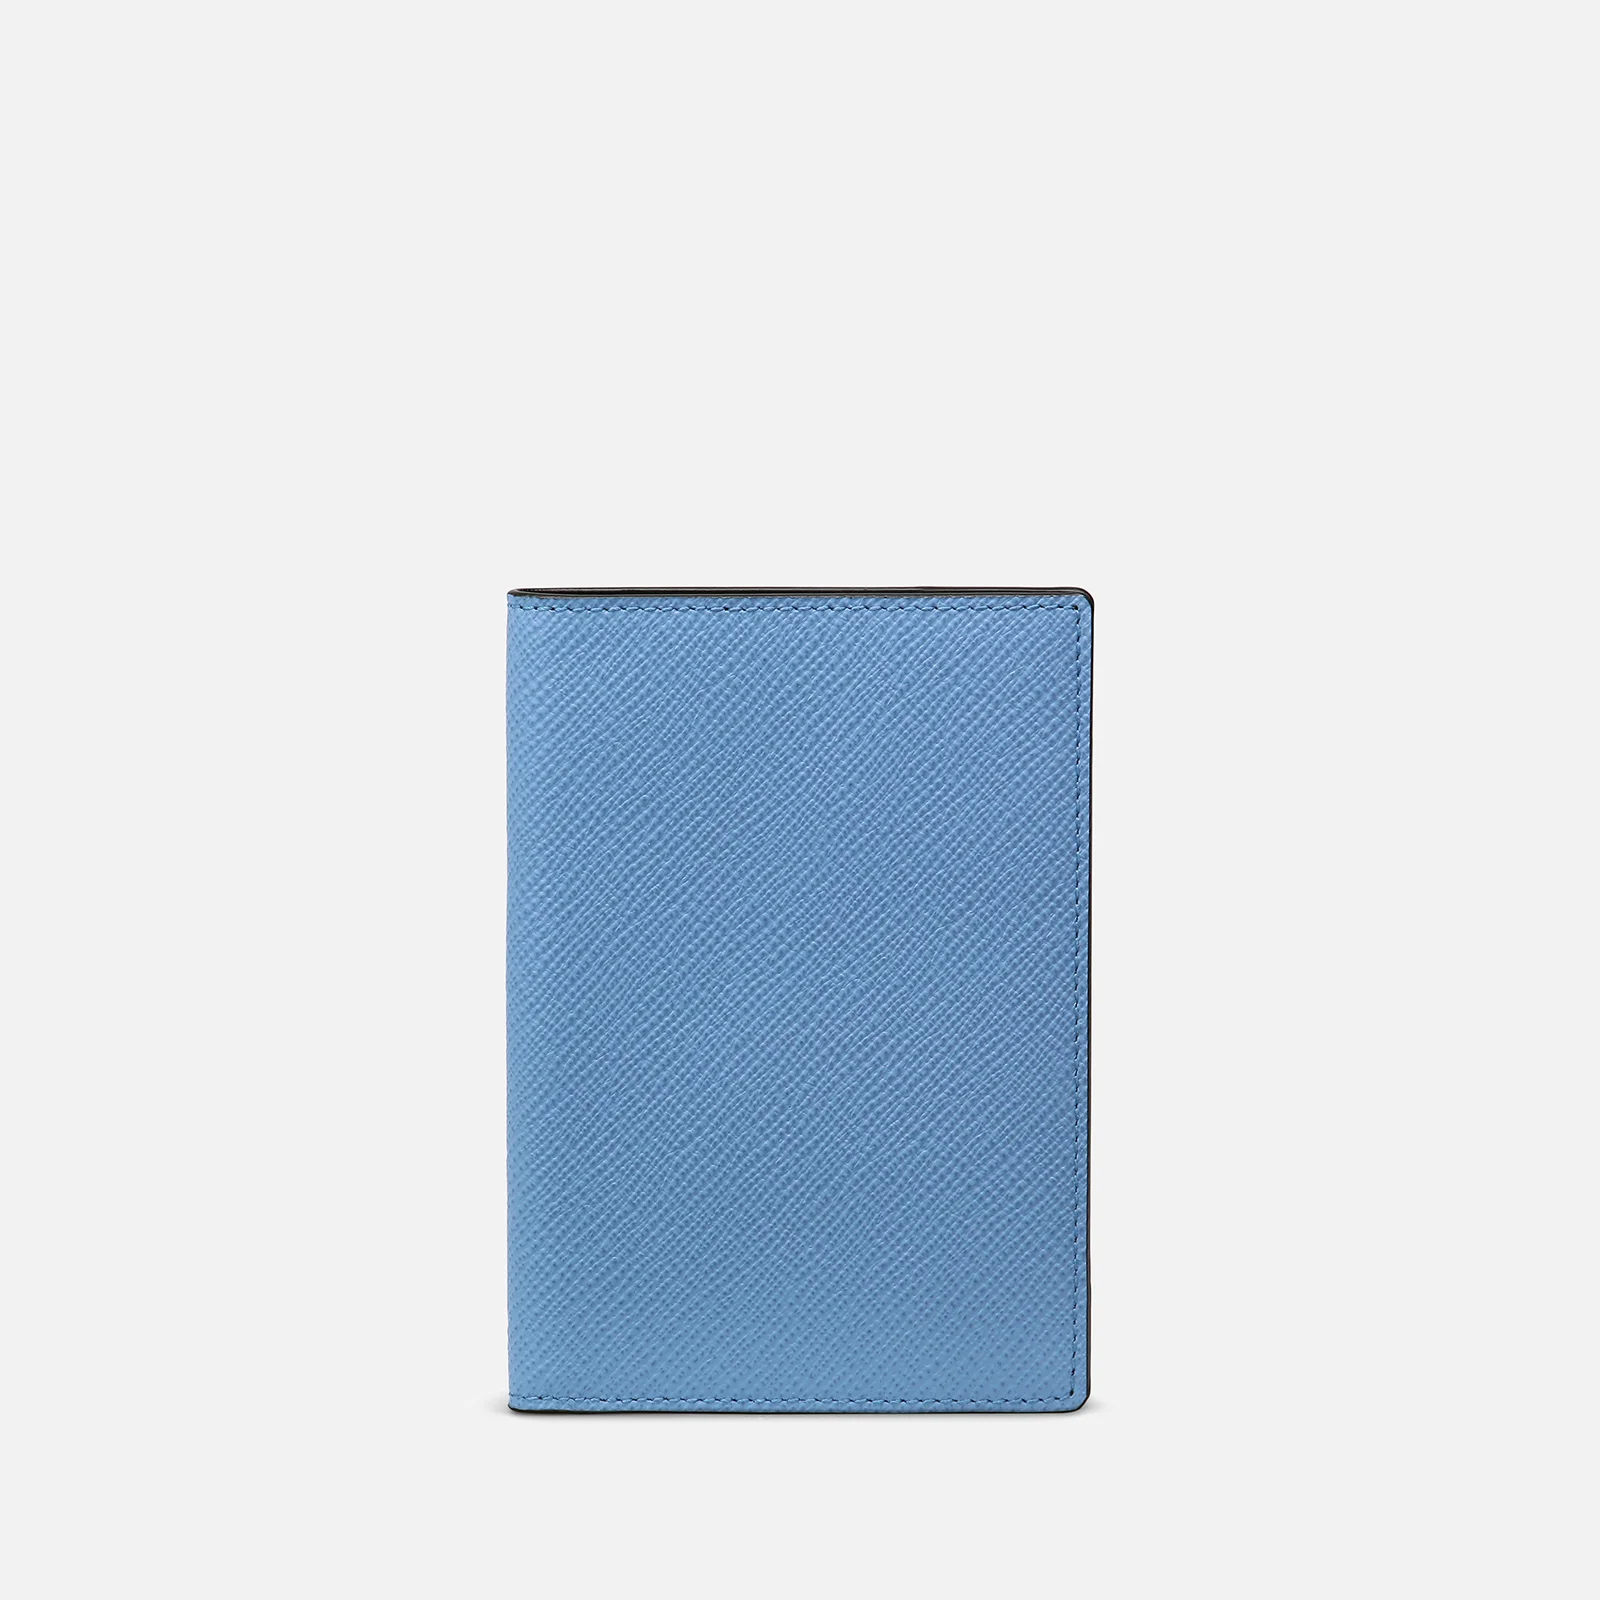 Smythson Women's Panama Passport Cover - Nile Blue Image 1